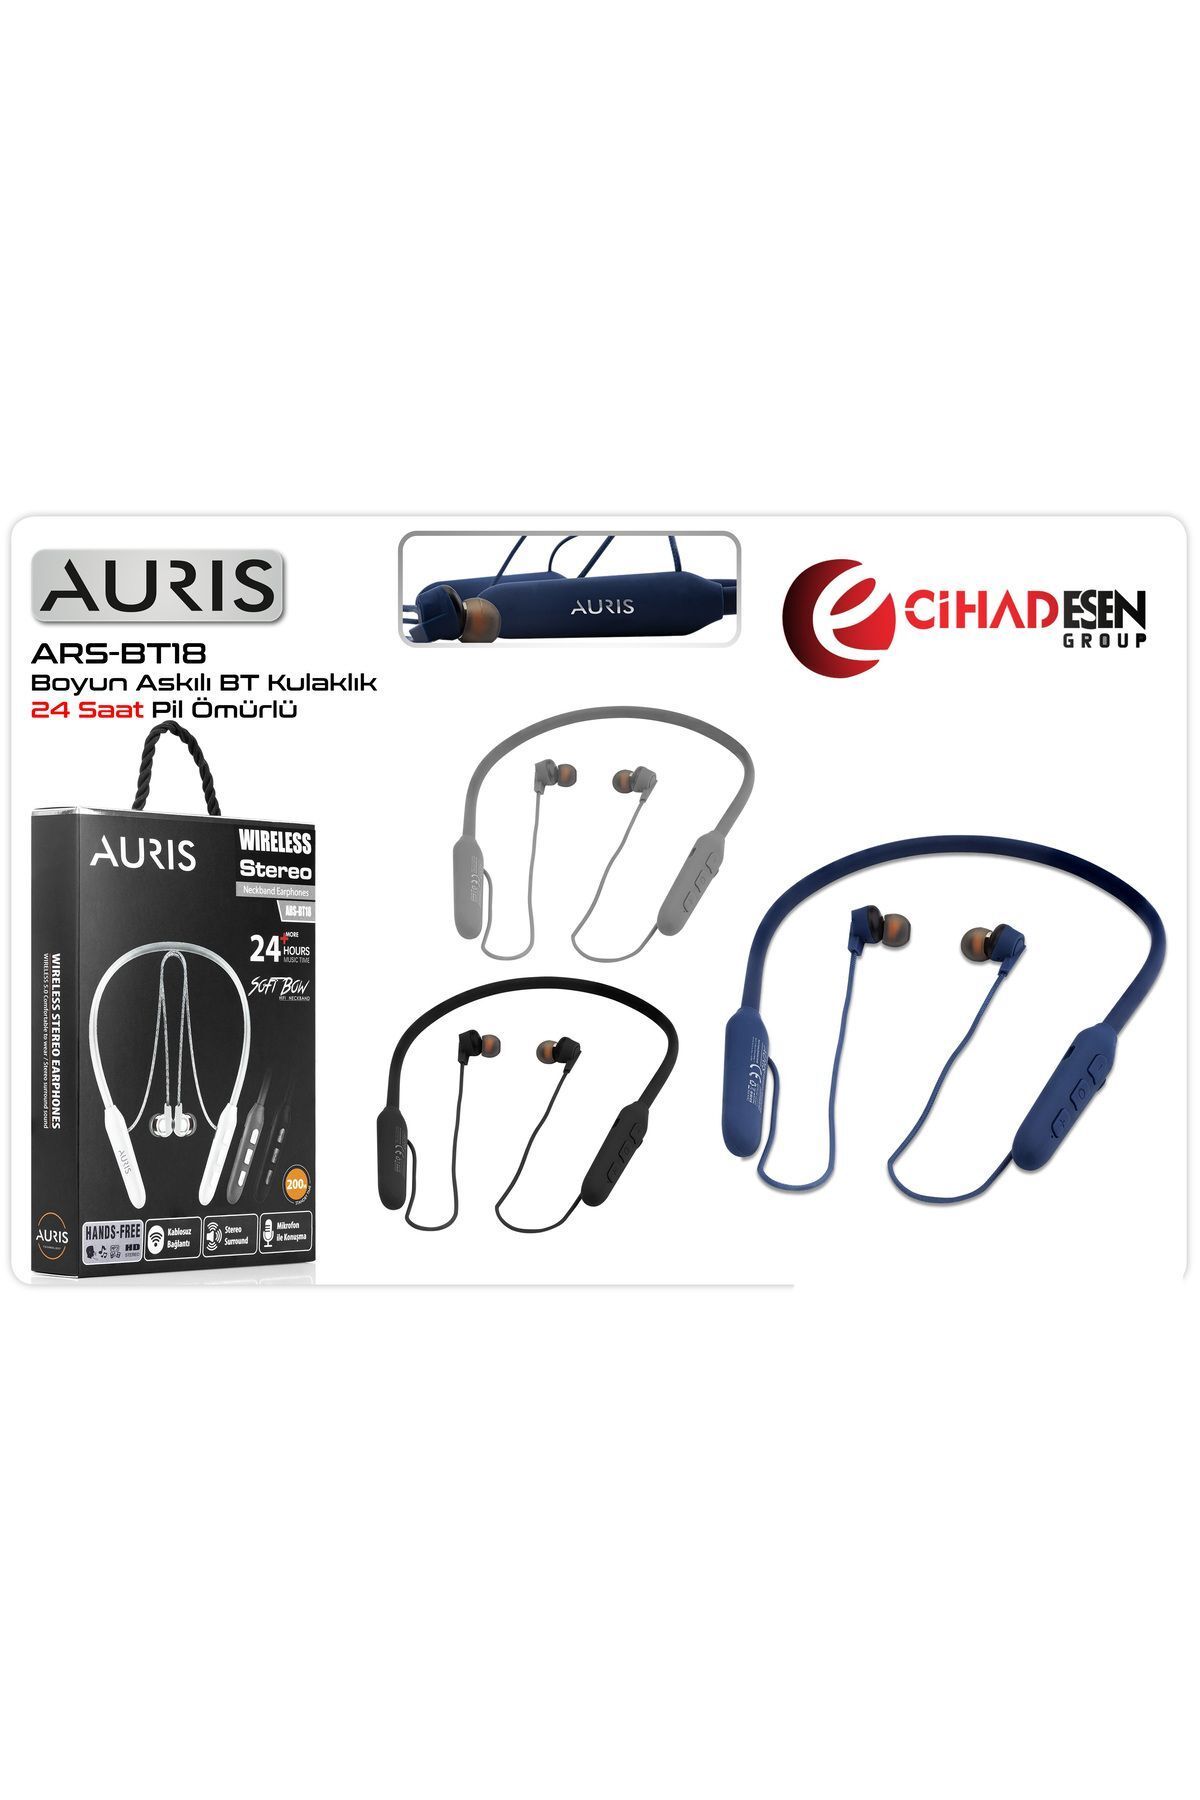 Auris AURİS ARS-BT18 Boyun Askılı Bluetooth Kablosuz Kulaklık 24 Saat Pil Ömürlü